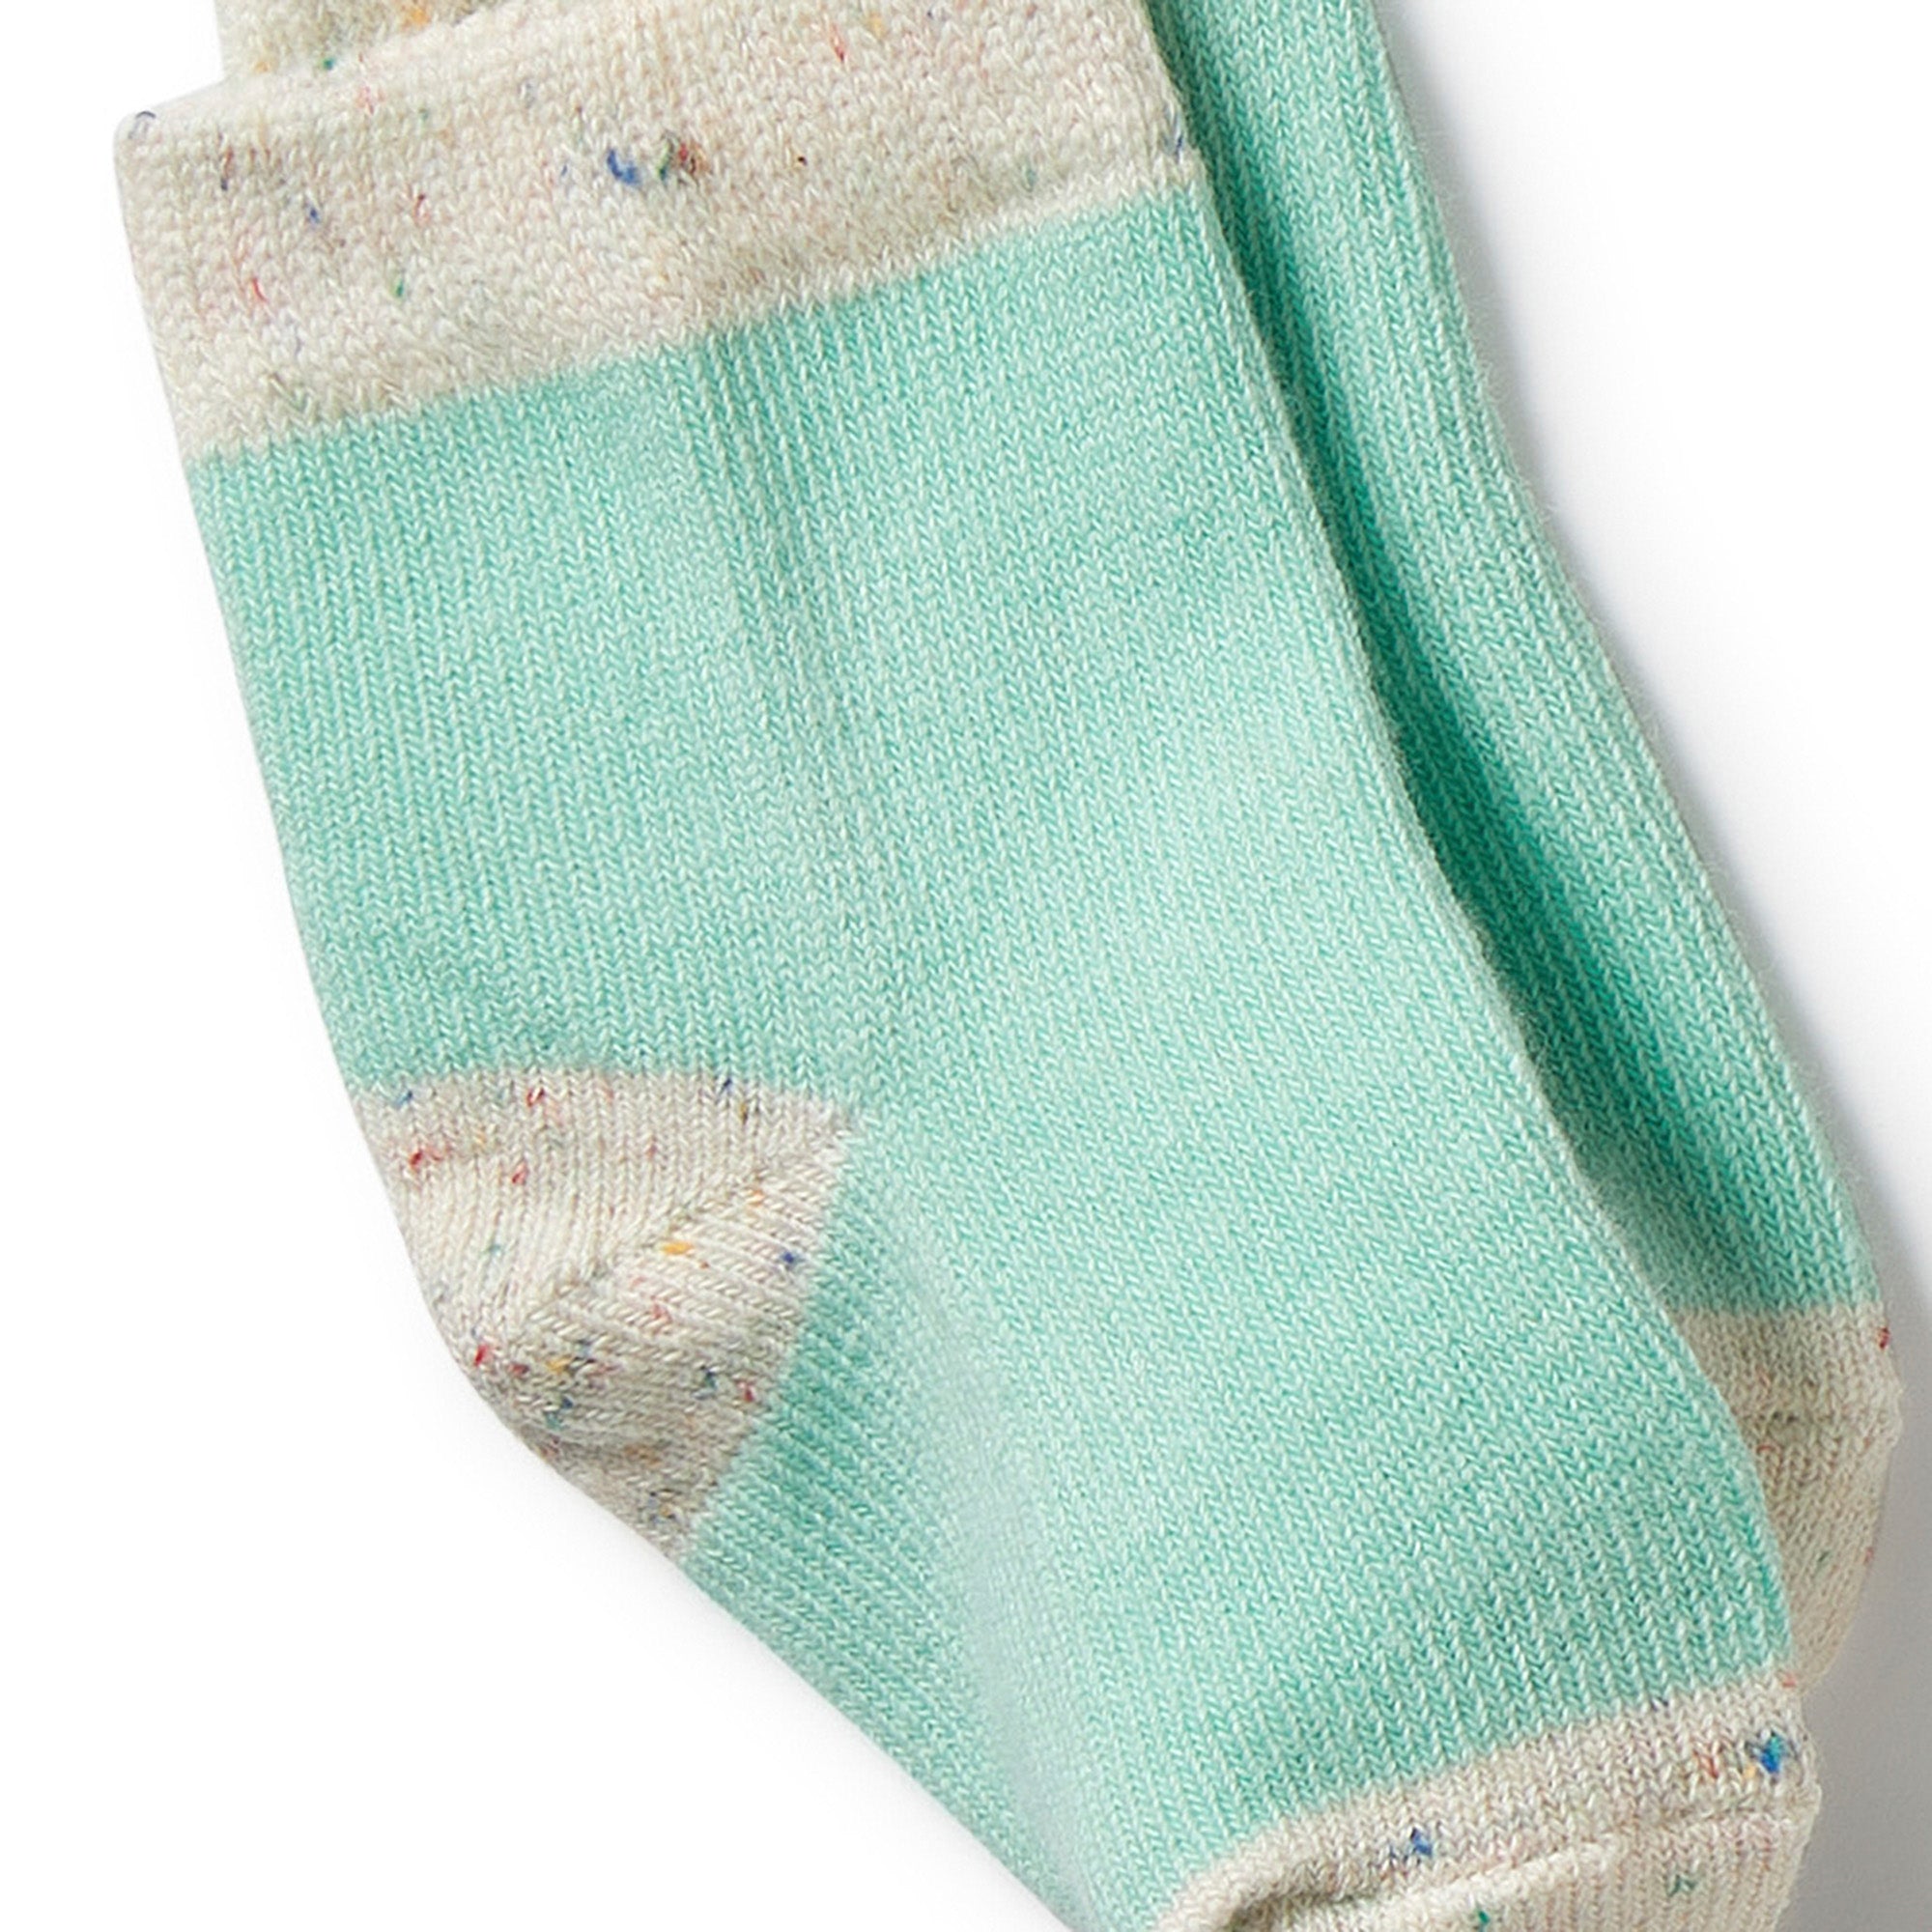 Wilson & Frenchy - Organic 3 Pack Baby Socks - Mint Green, Cactus, Smoke Blue